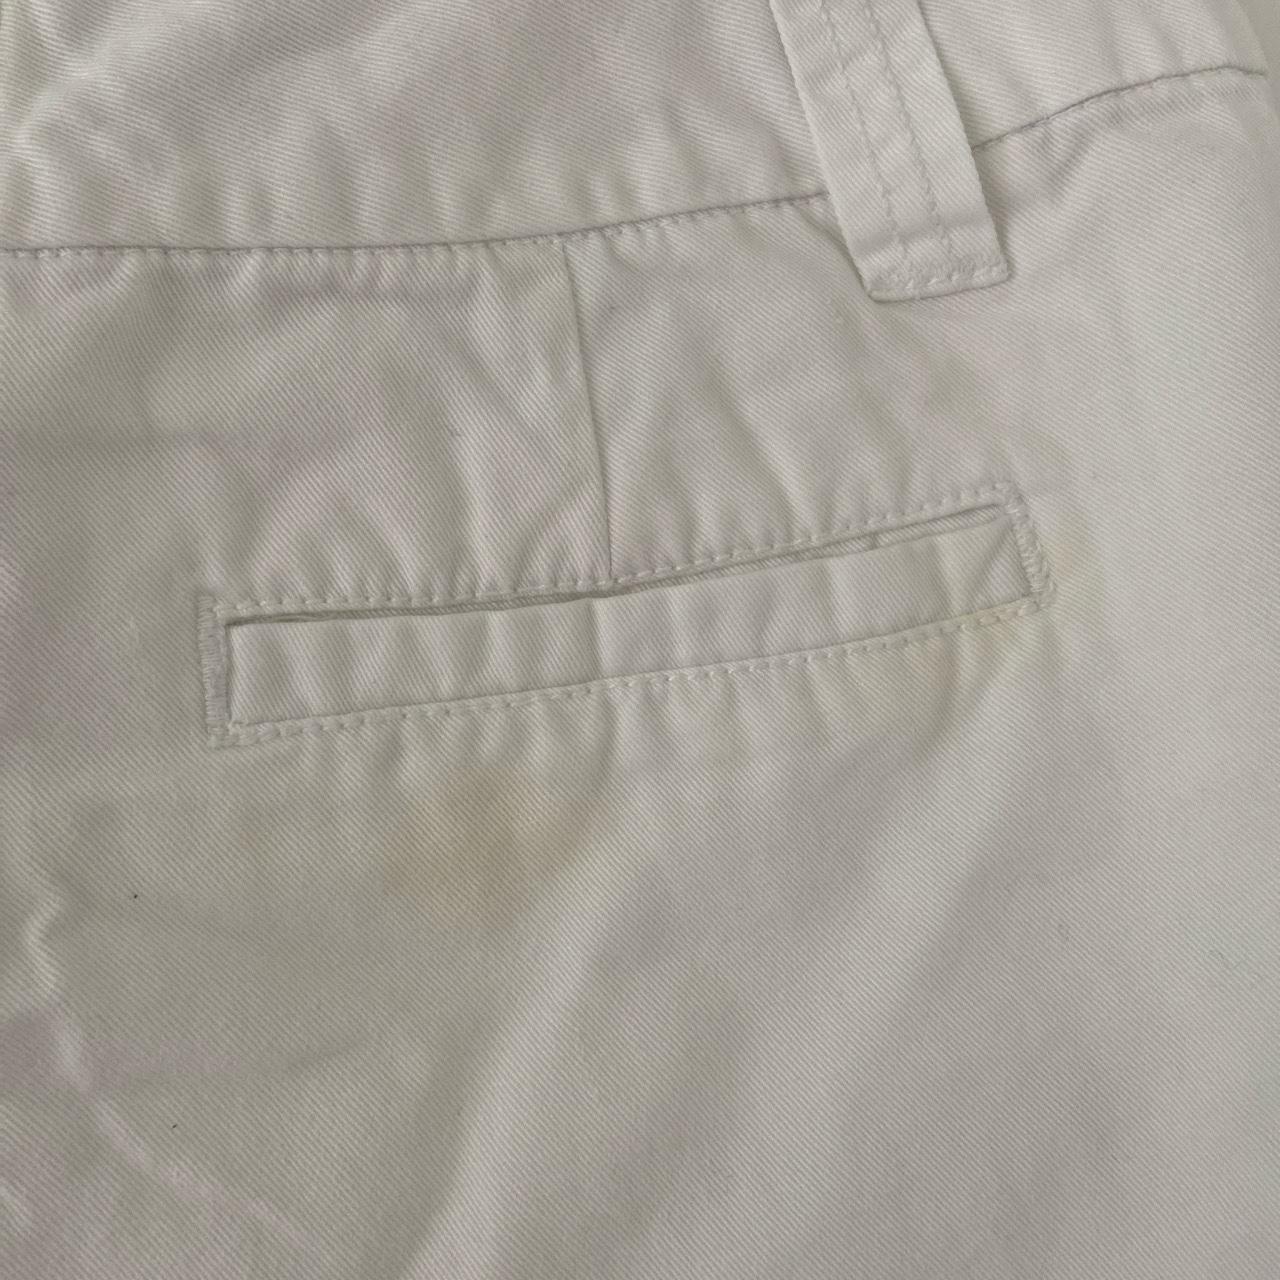 Khaki Krew Women's White and Cream Shorts (3)